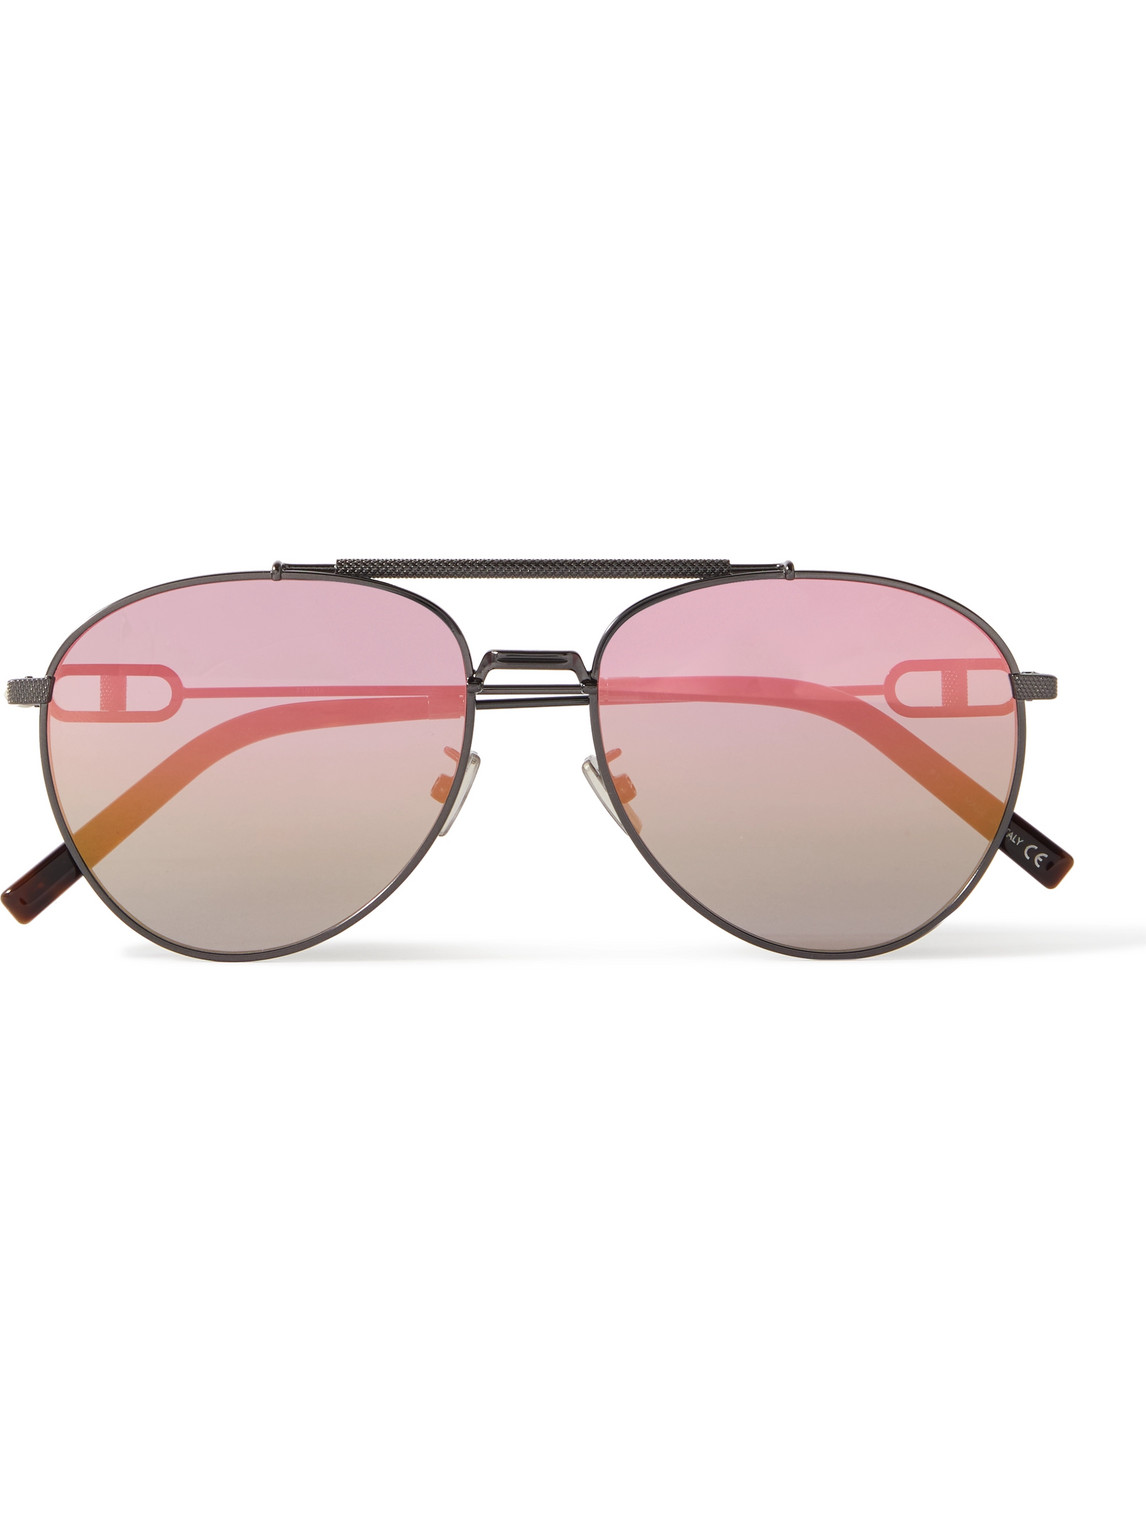 Dior Eyewear - CD Link R1U Aviator-Style Gunmetal-Tone Sunglasses - Men - Metallic von Dior Eyewear